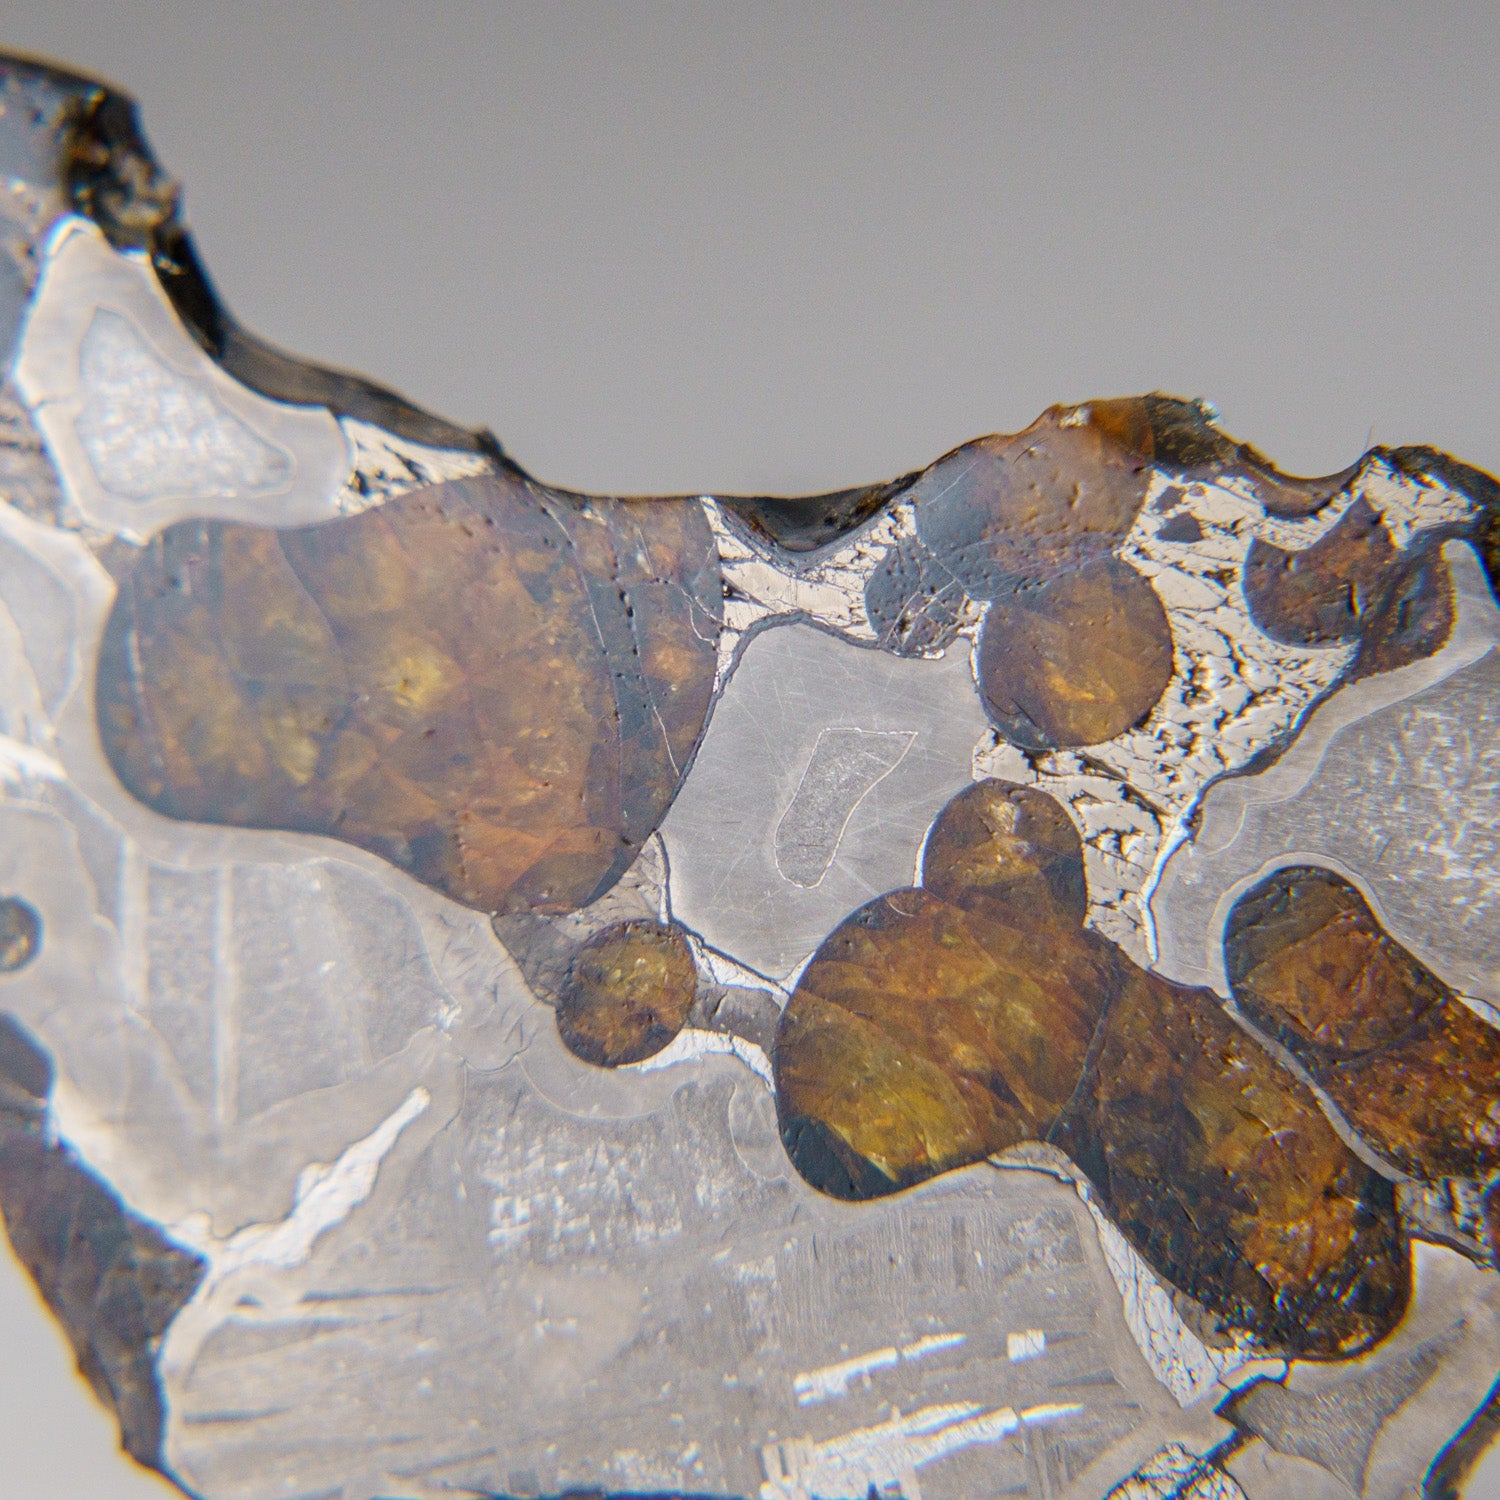 Genuine Brenhama Pallasite Meteorite Slice (15 grams)